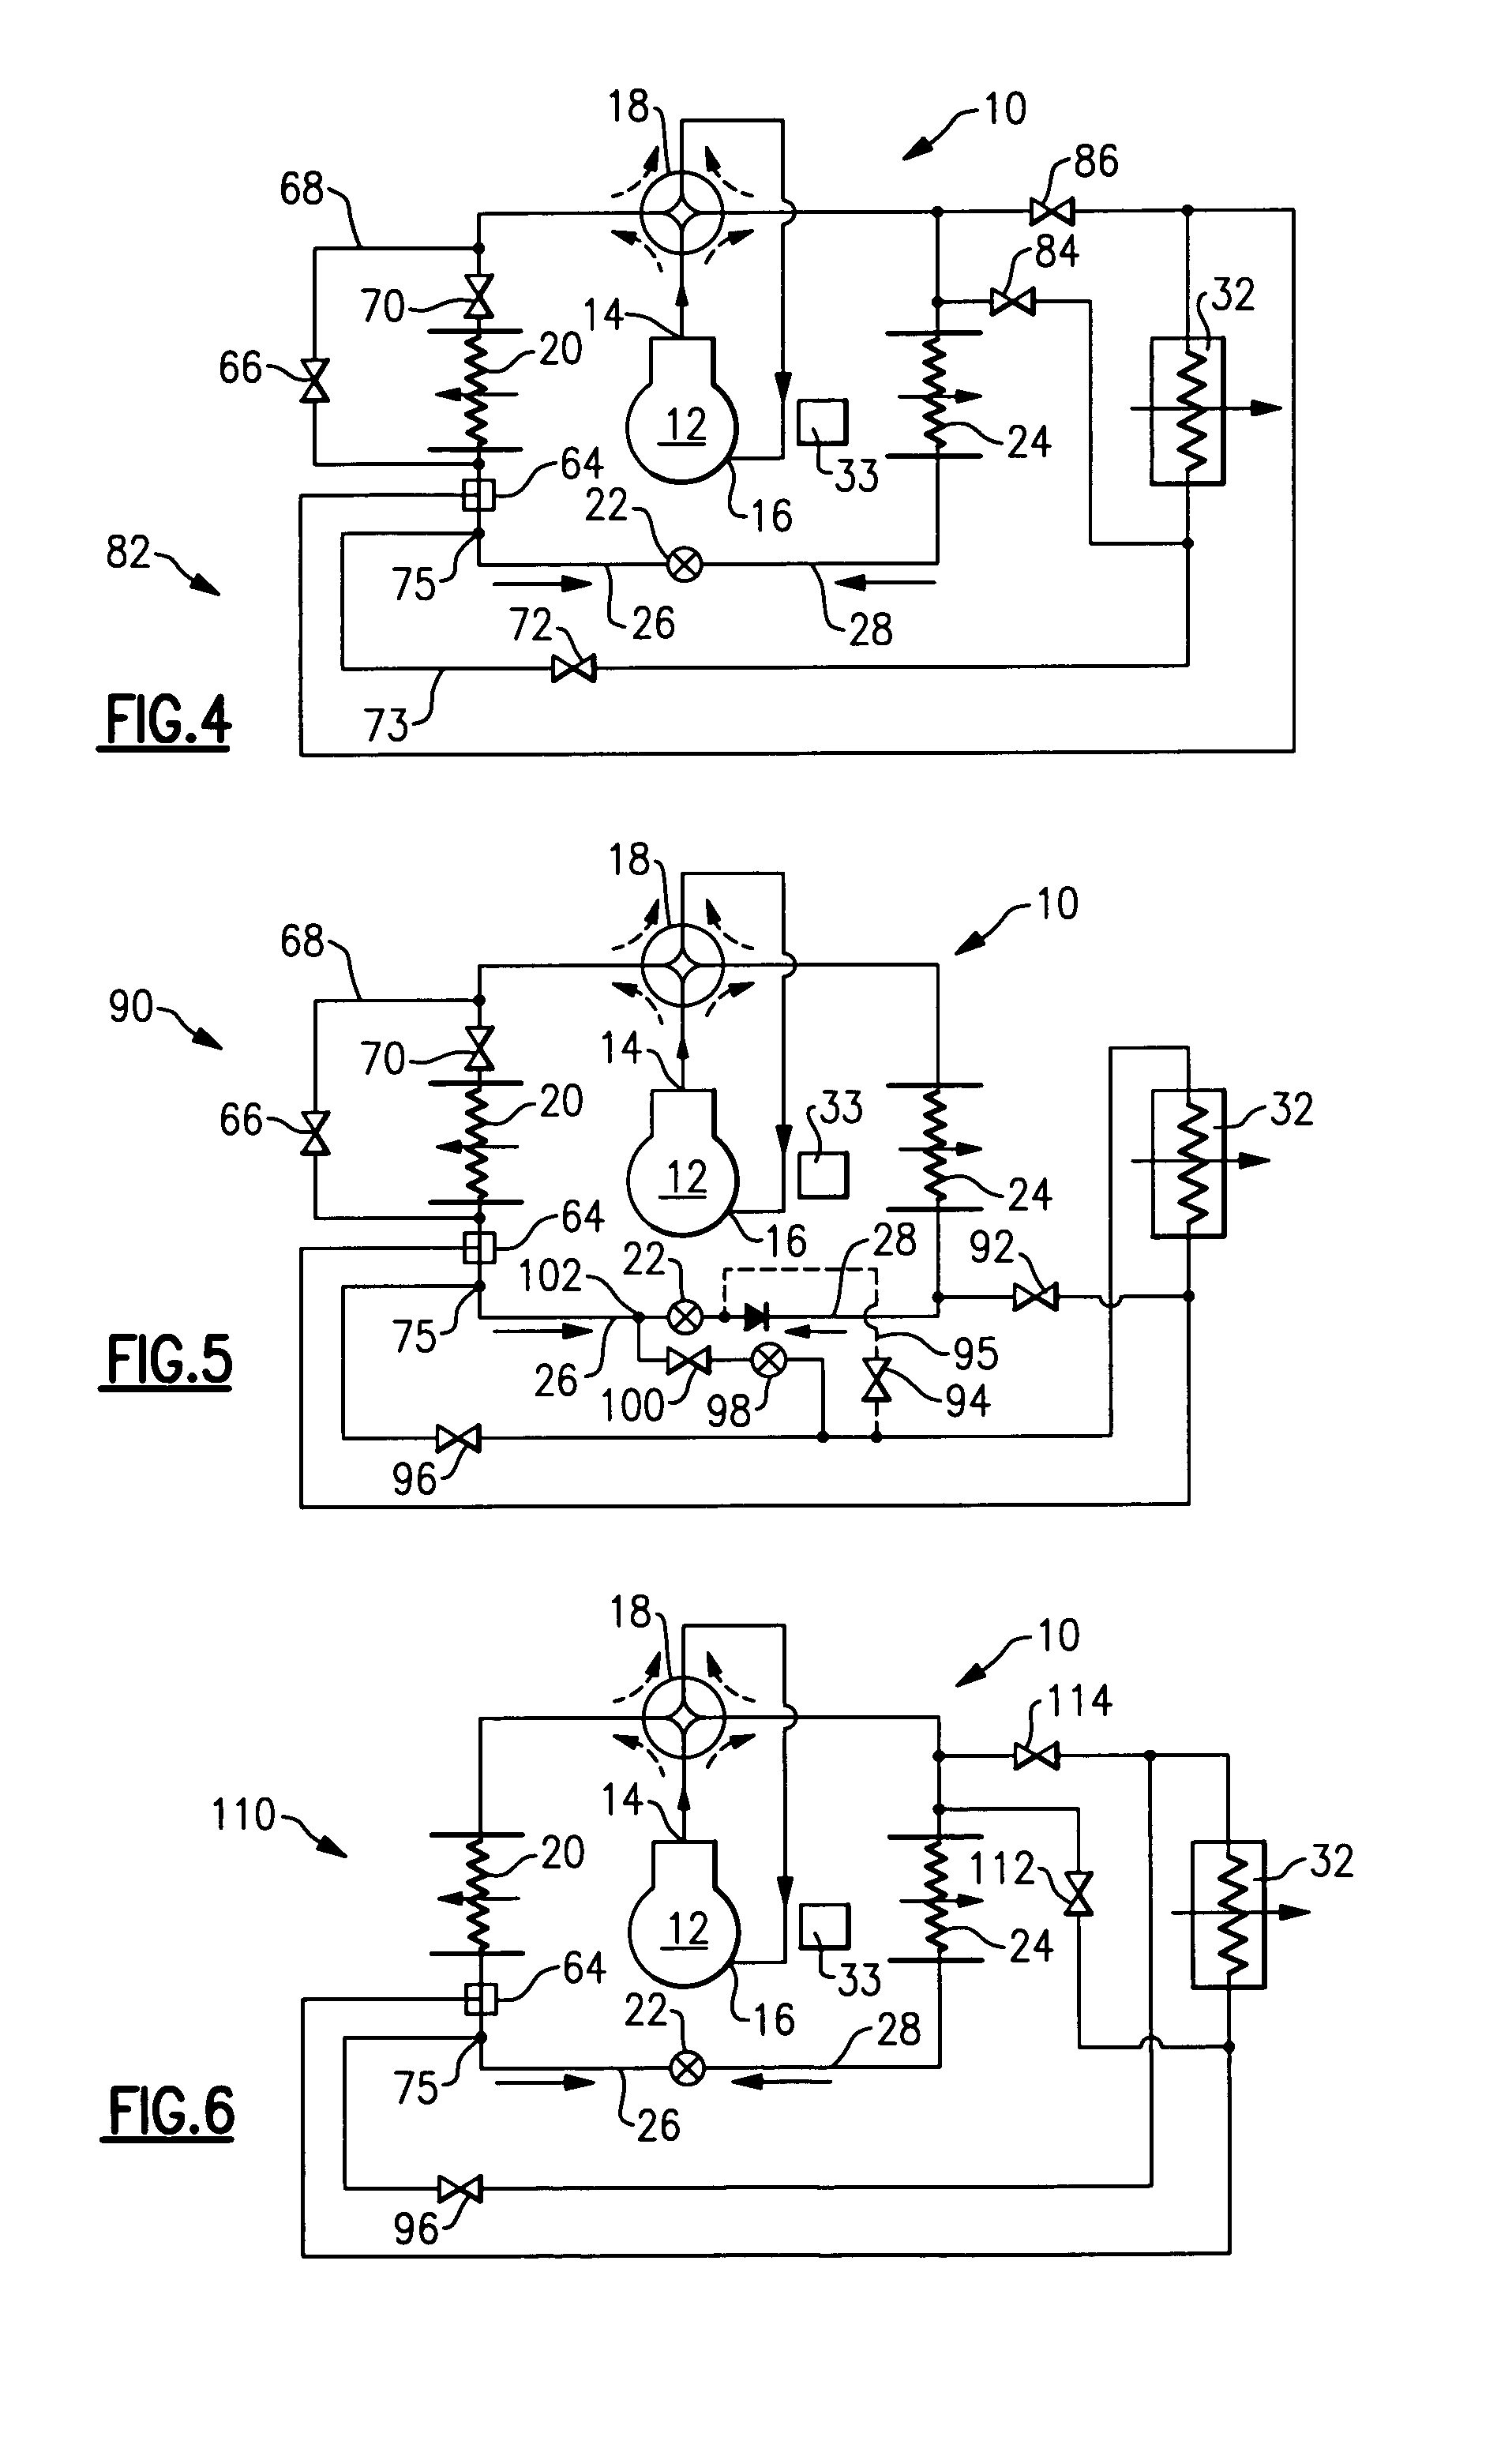 Heat pump with reheat circuit